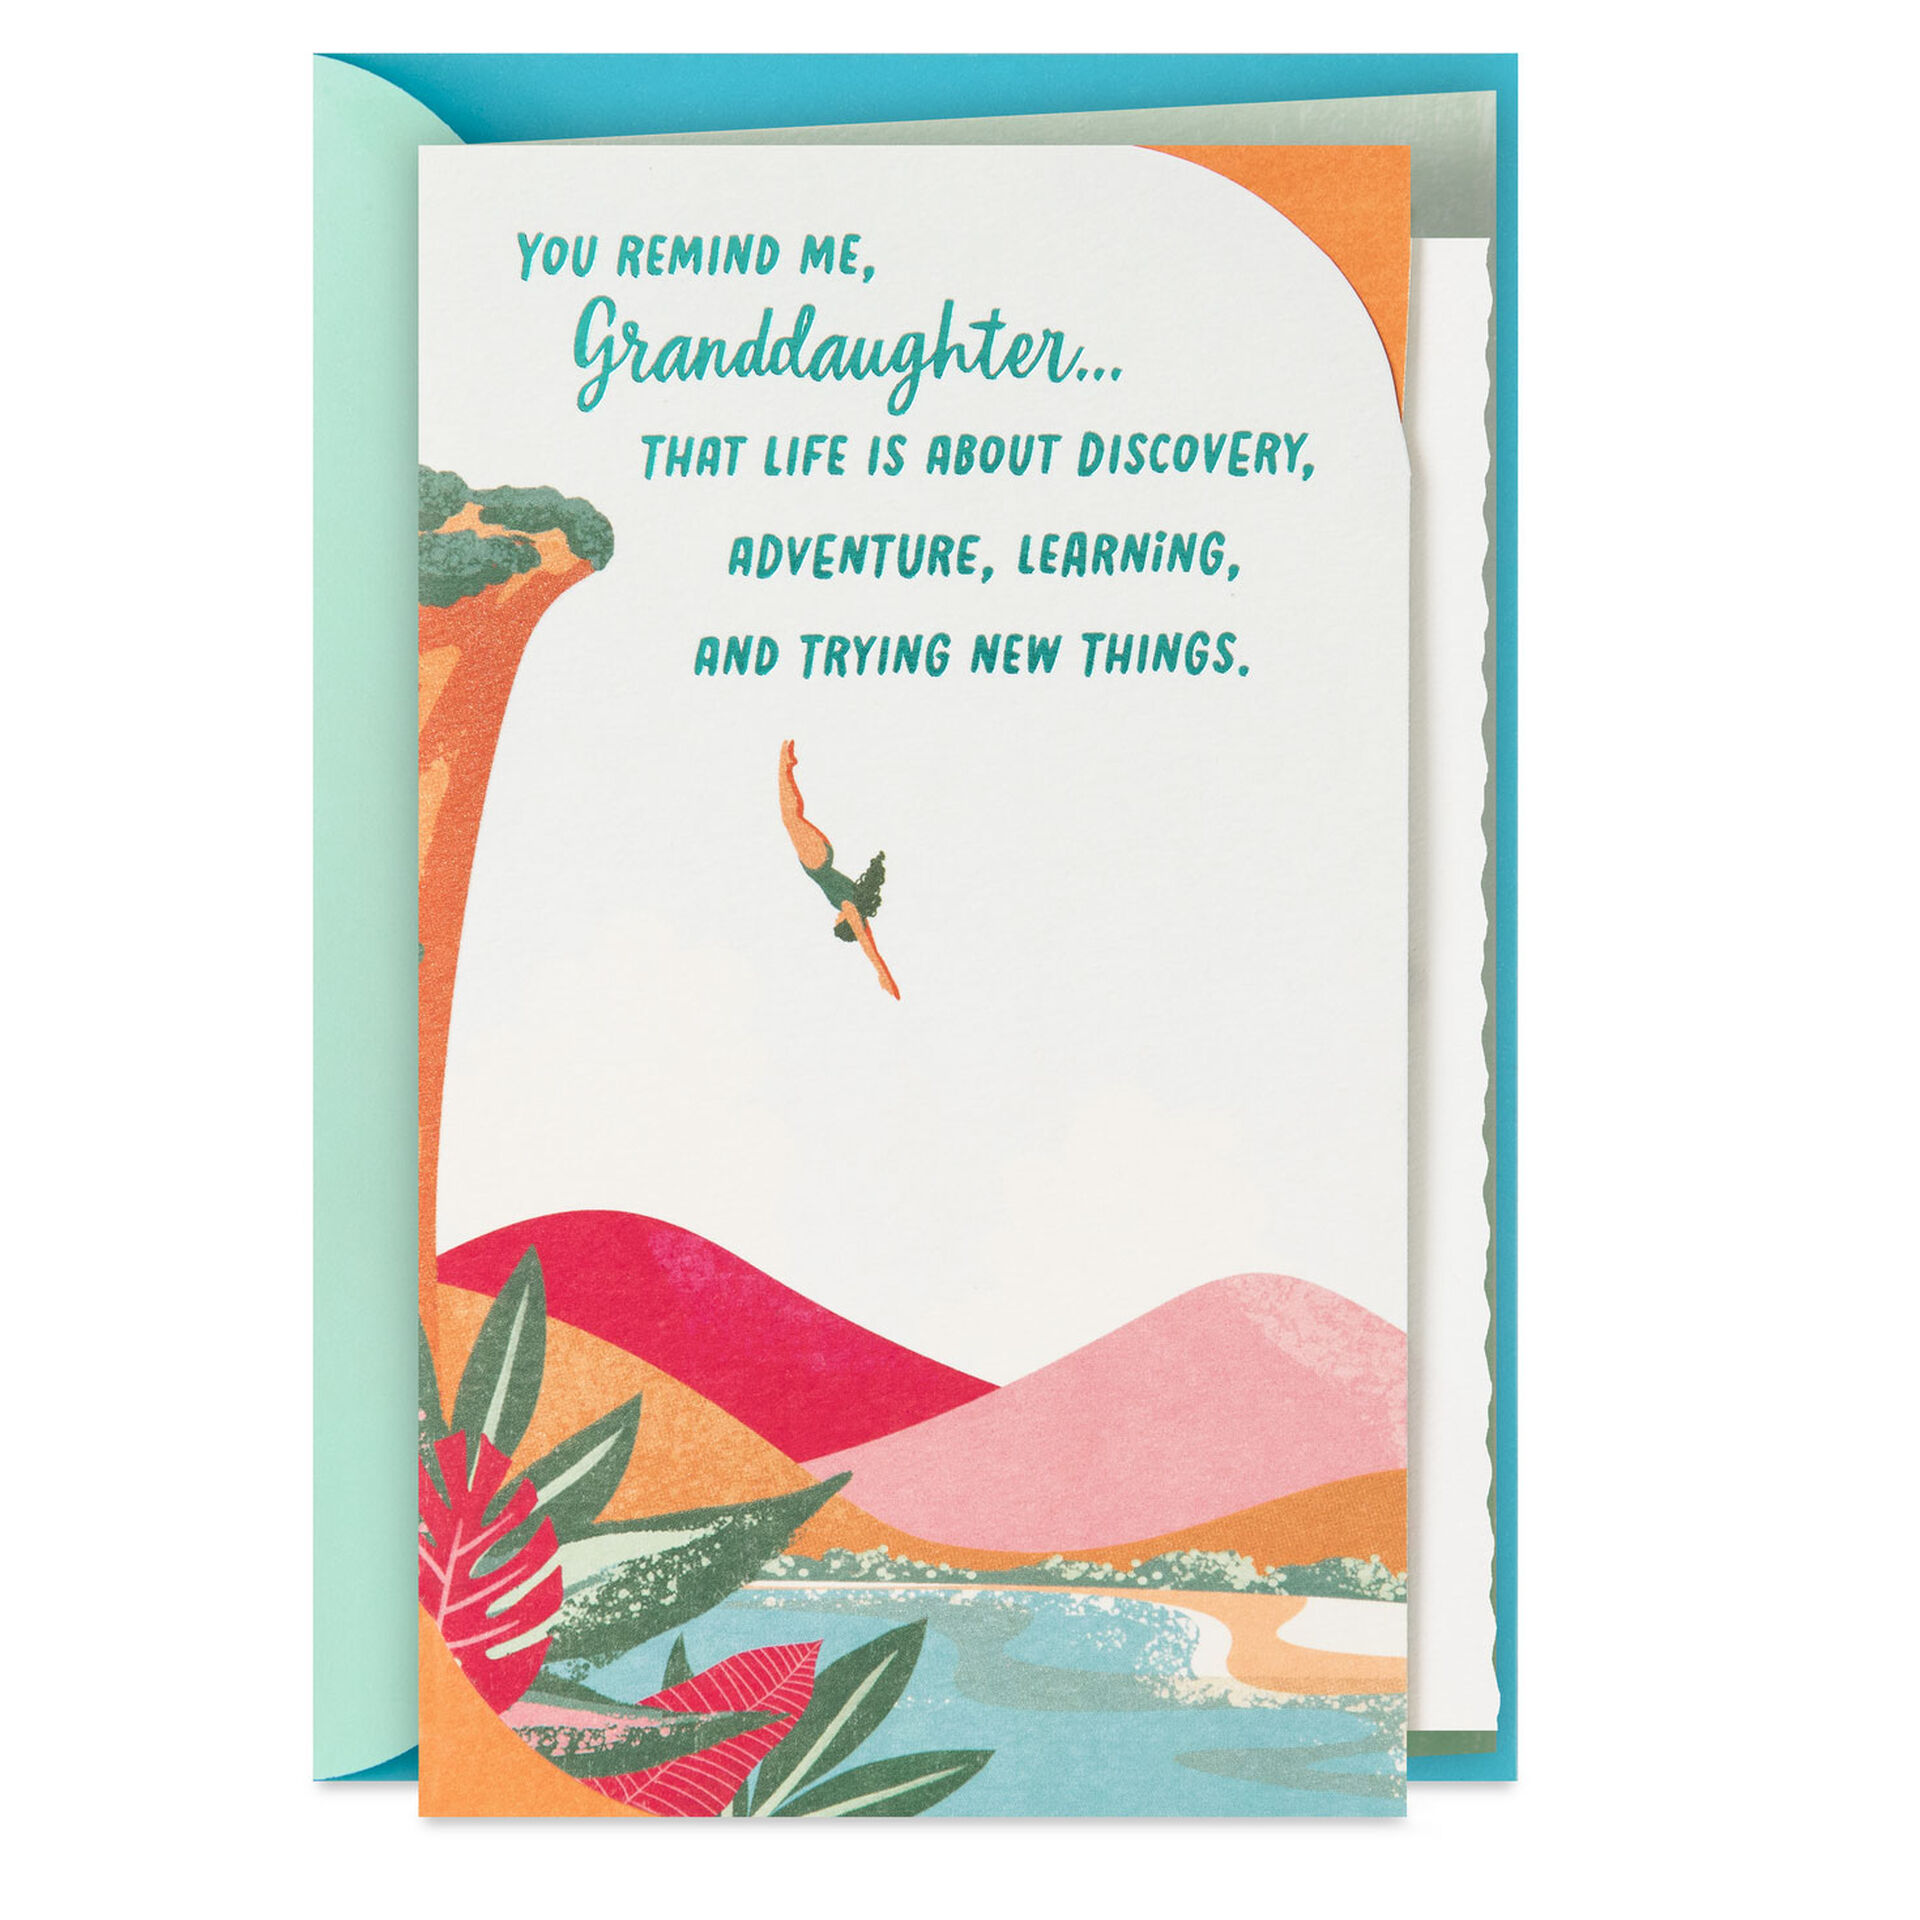 Cliff-Diving-Adventure-Granddaughter-Birthday-Card_599FBD6040_01